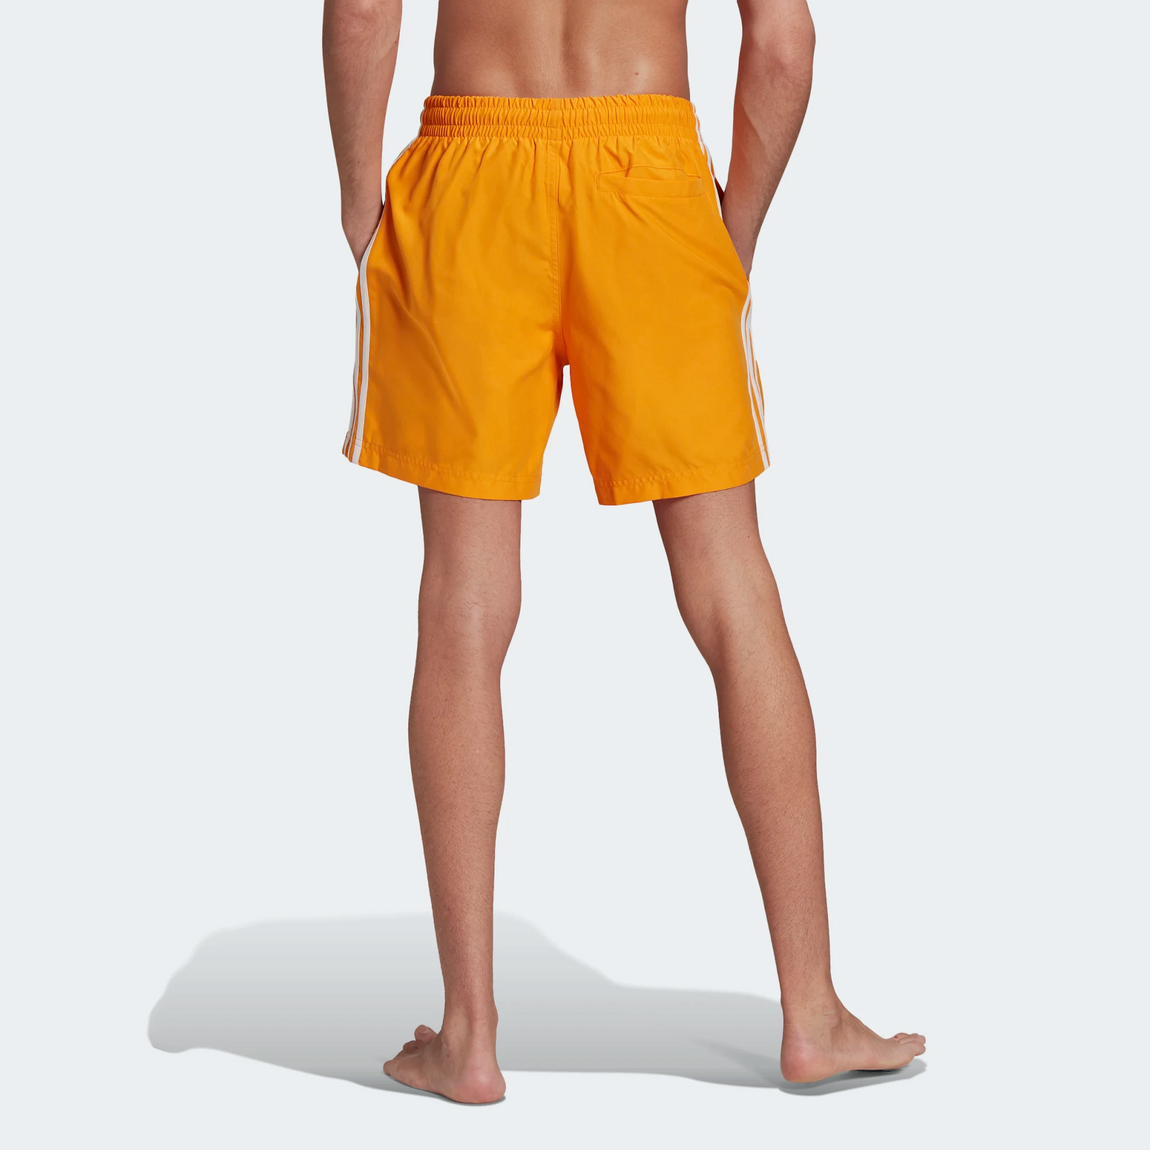 Adidas Classics 3-Stripes Swim Shorts (Bright Orange/White) - Adidas Classics 3-Stripes Swim Shorts (Bright Orange/White) - 